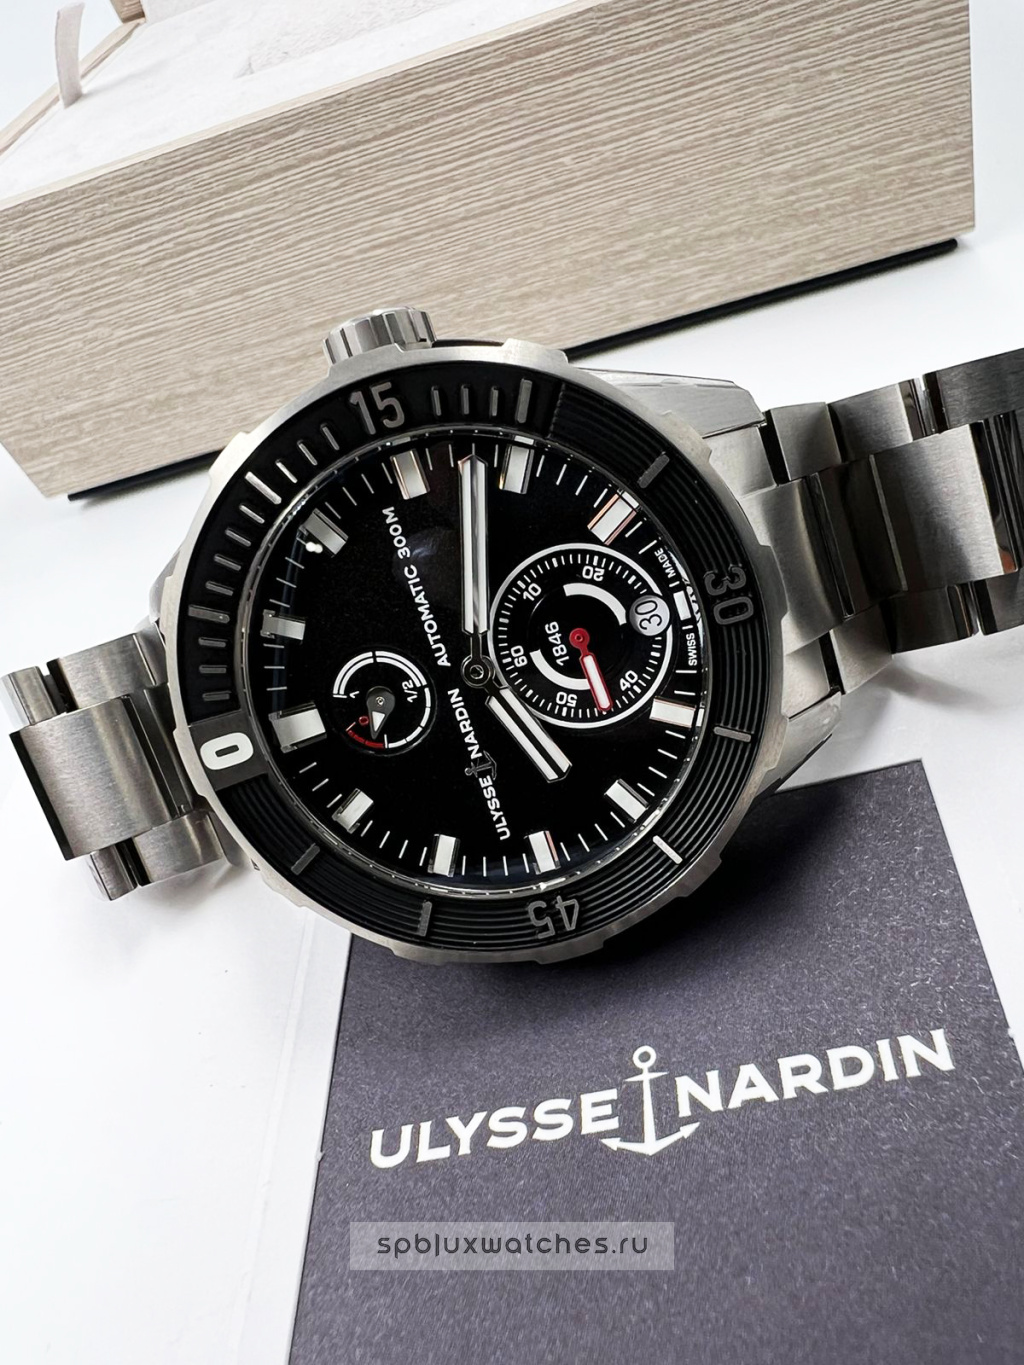 Ulysse Nardin Marine Diver Chronometer 44 mm 1183-170-7M/92